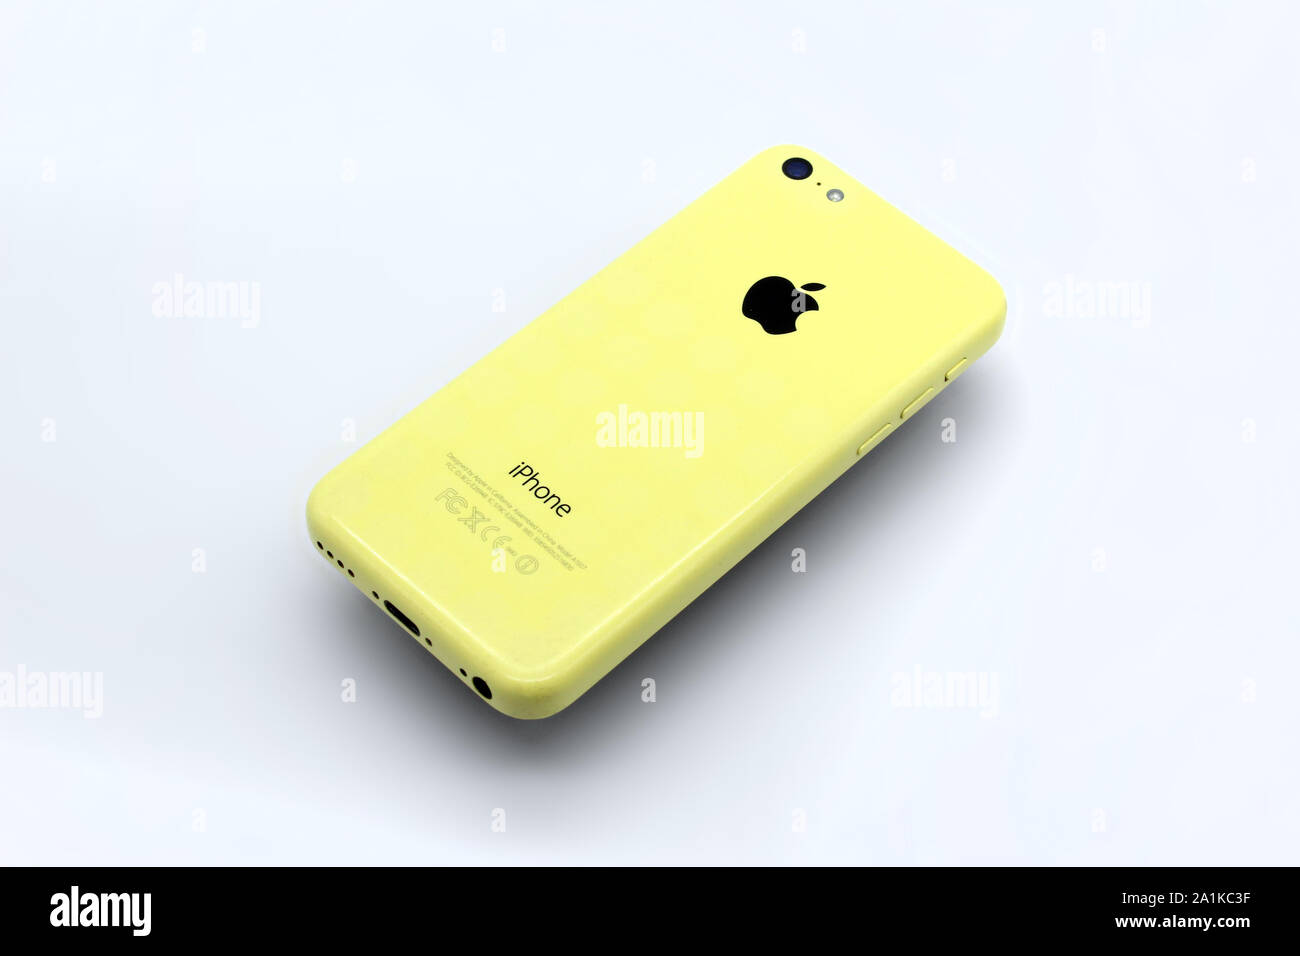 Apple Iphone SE 5c smartphone yellow, isolated on white background, close-up Stock Photo